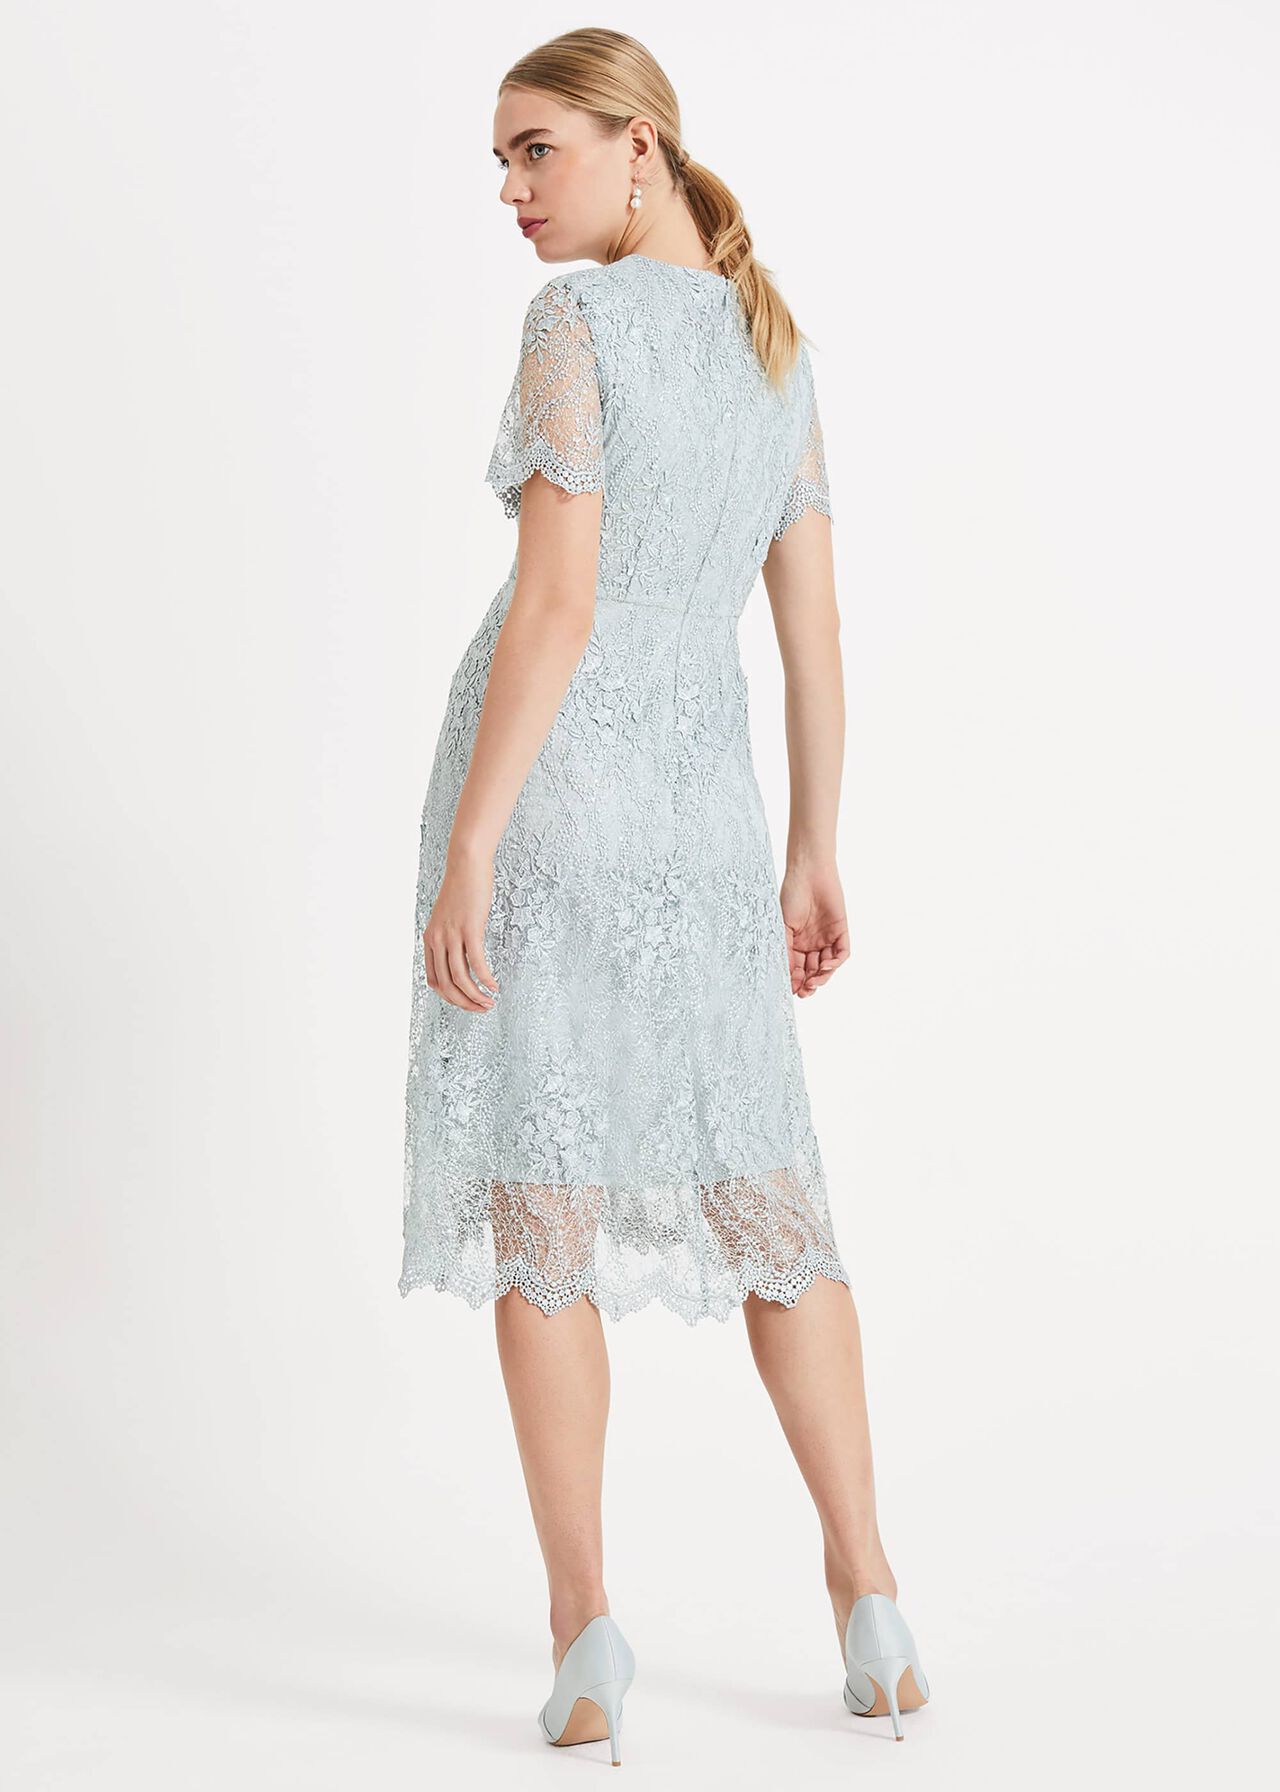 Malia Sequin Lace Dress